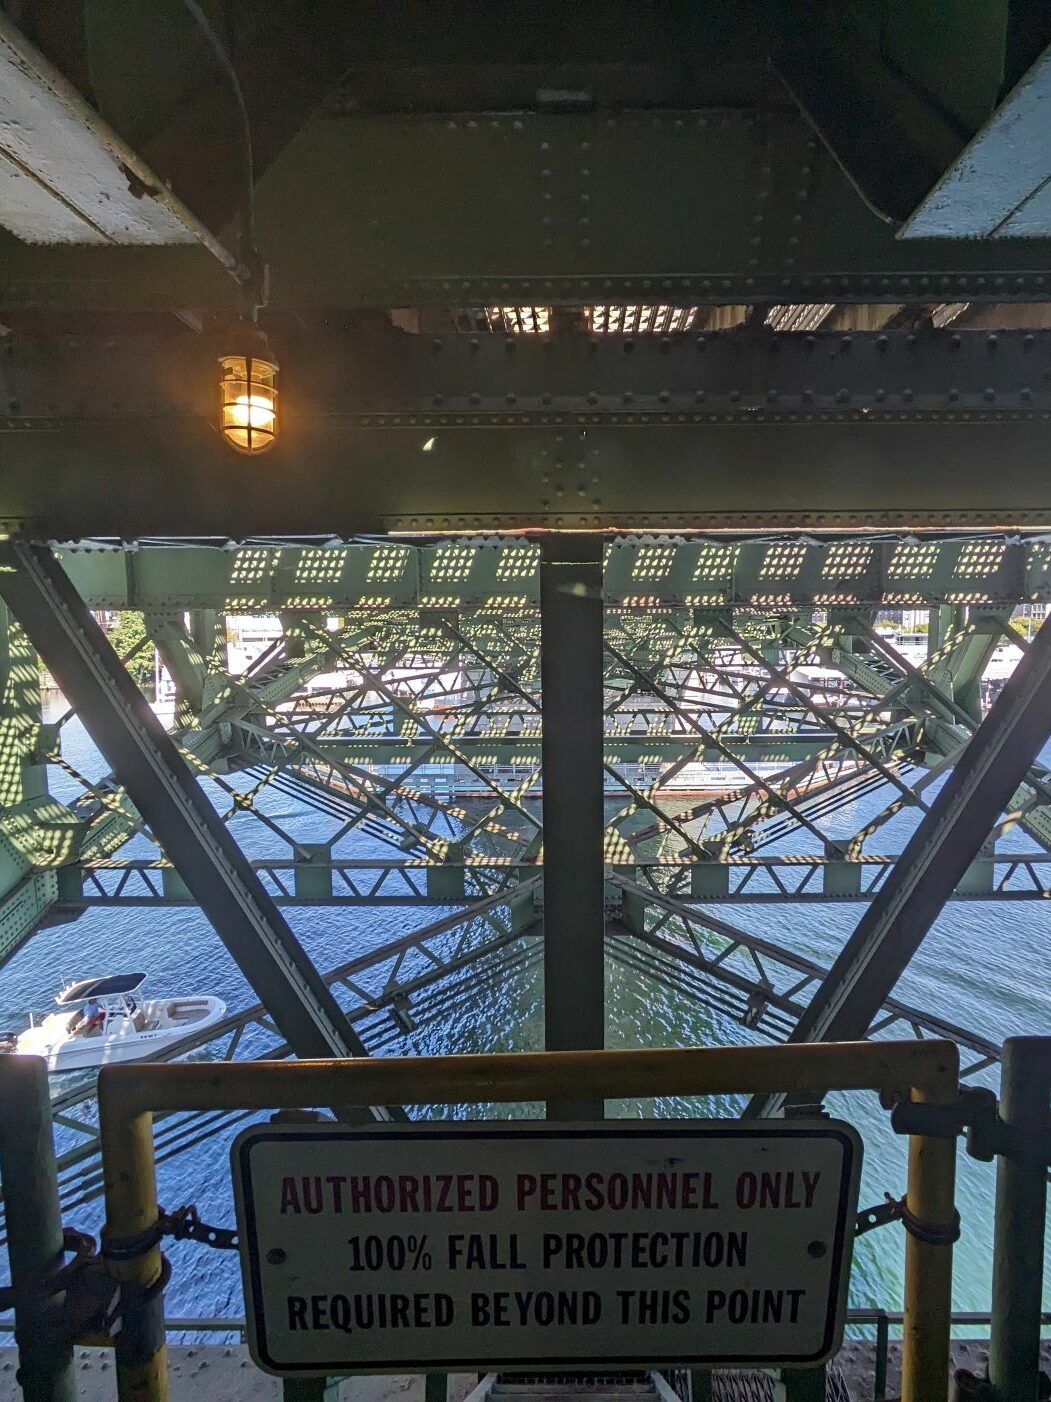 From Inside The Bridge!